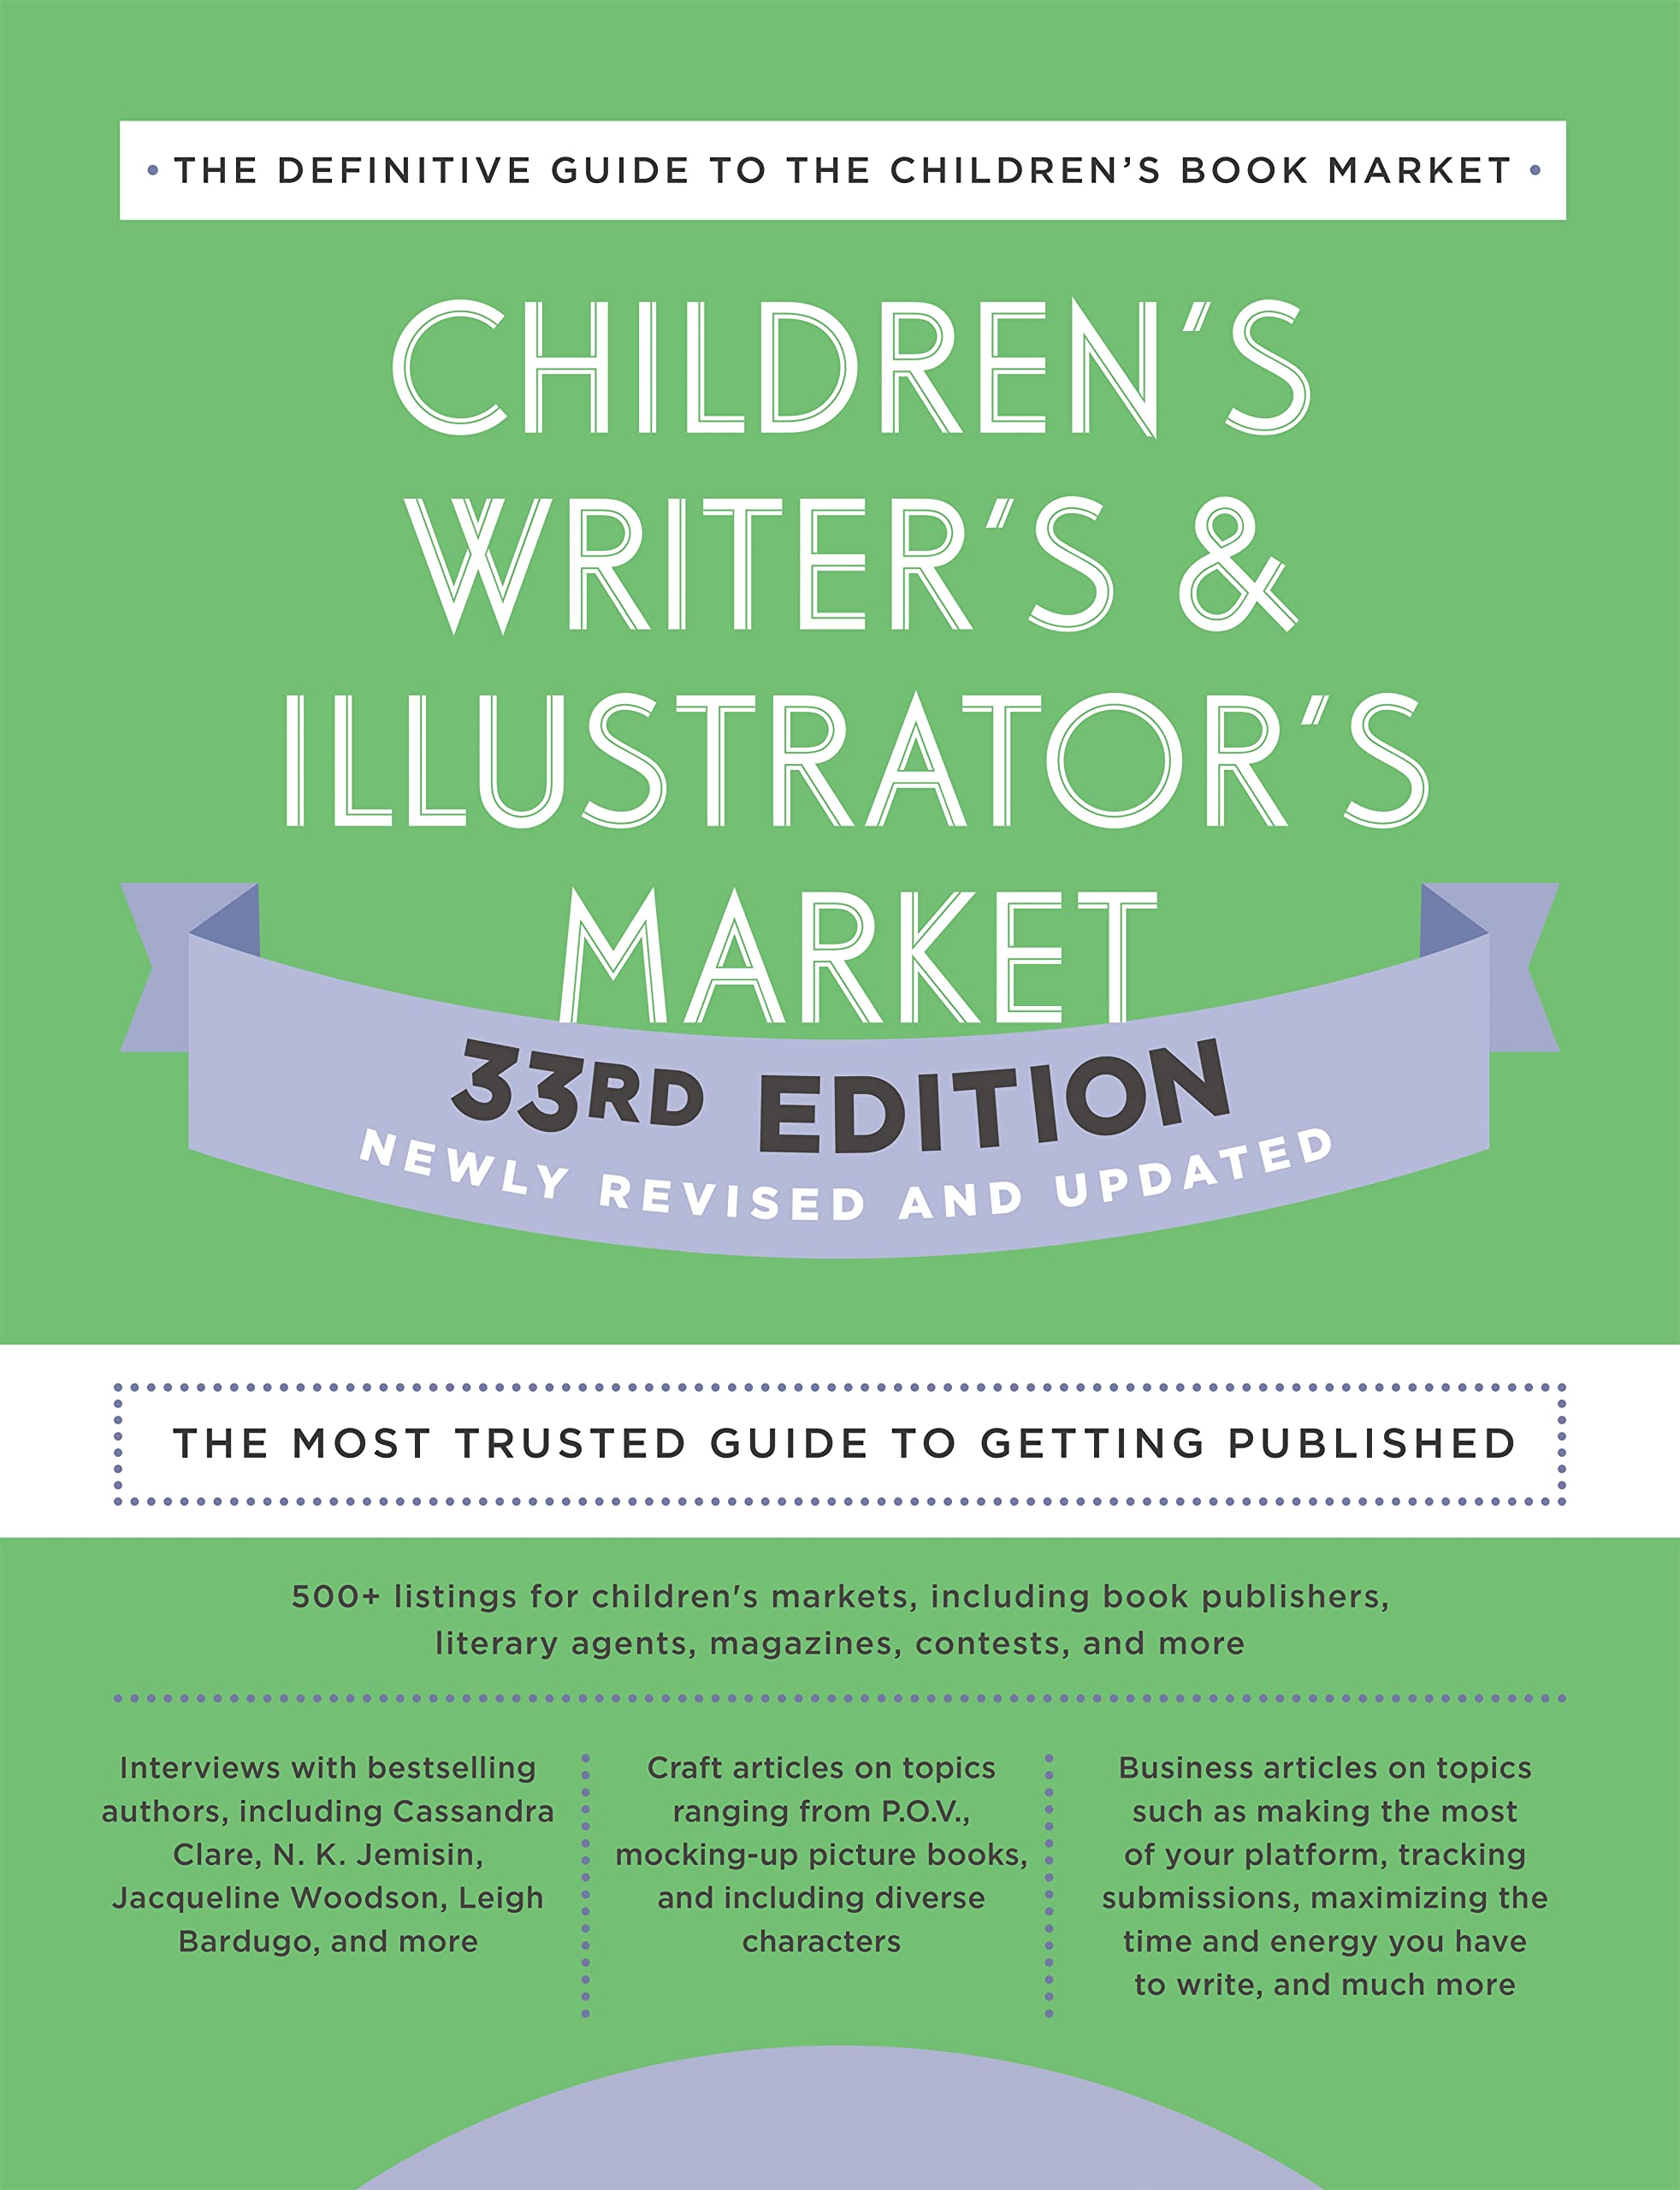 CHILDREN'S WRITER'S & ILLUSTRATOR'S MARKET 33RD EDITION, Elizabeth Sims contributor